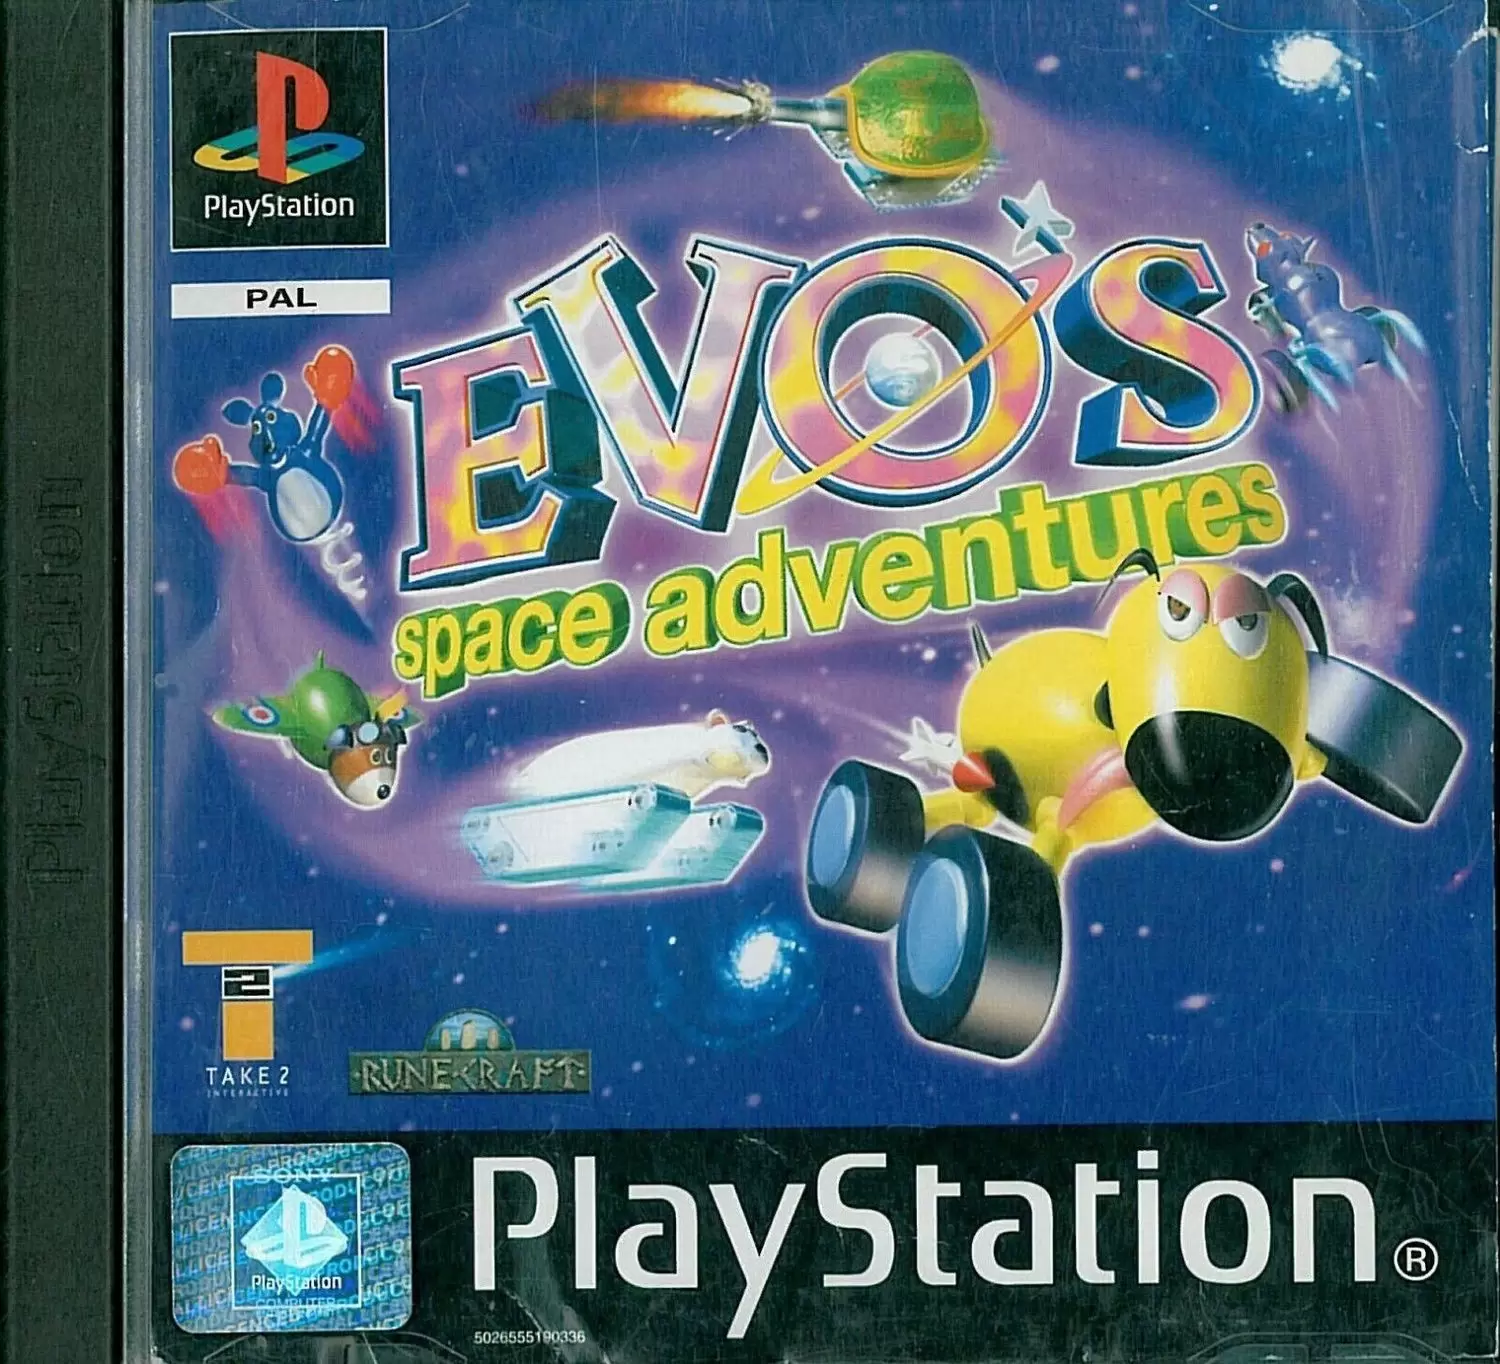 Playstation games - EVOS space adventures